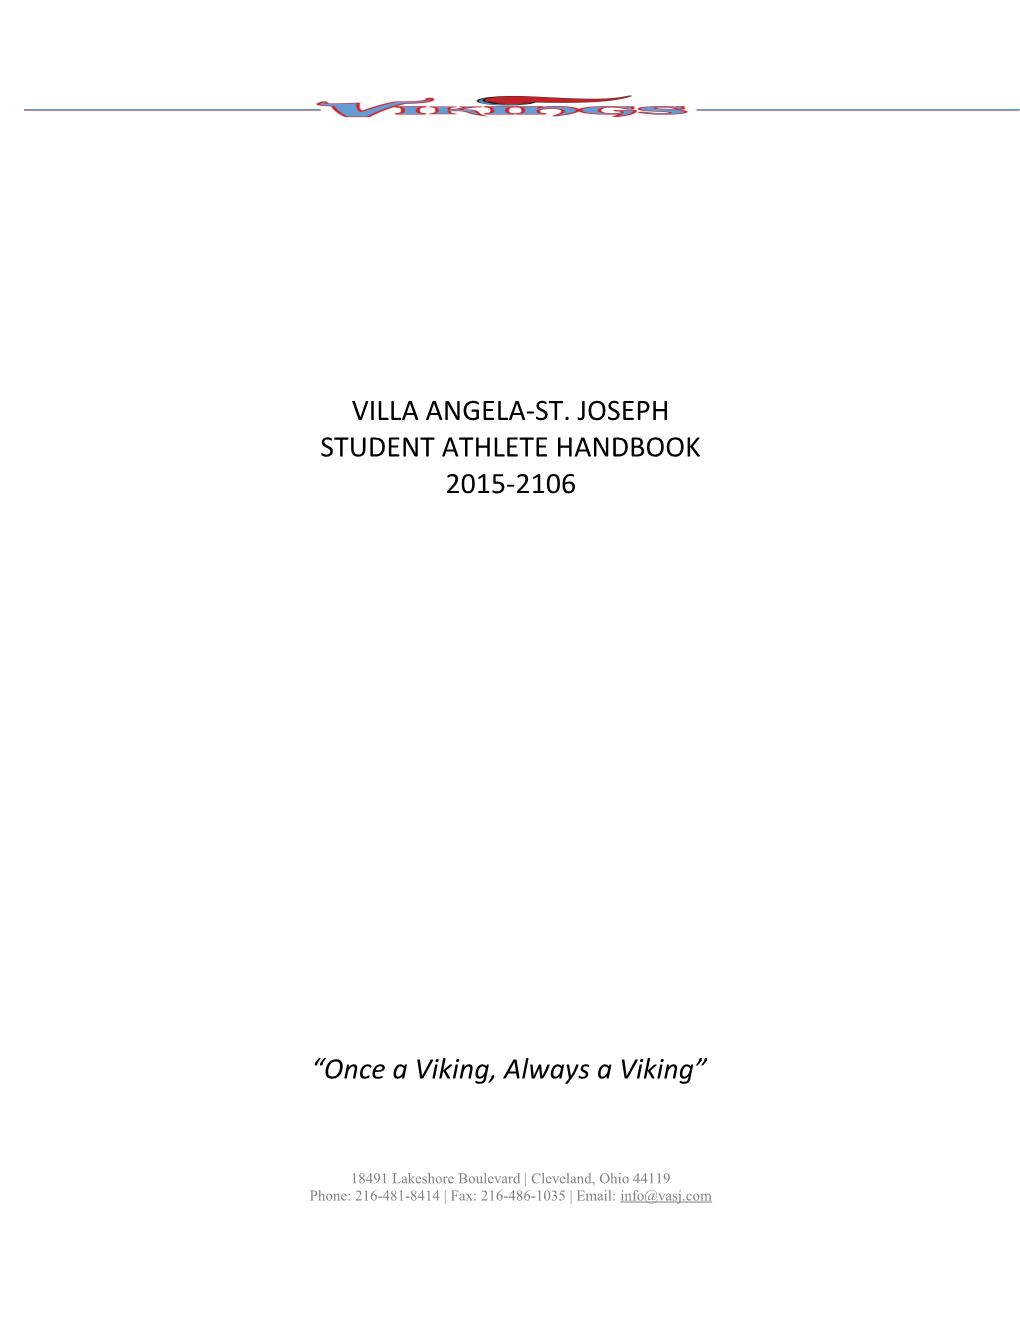 Villa Angela-St. Joseph Student Athlete Handbook 2015-2106